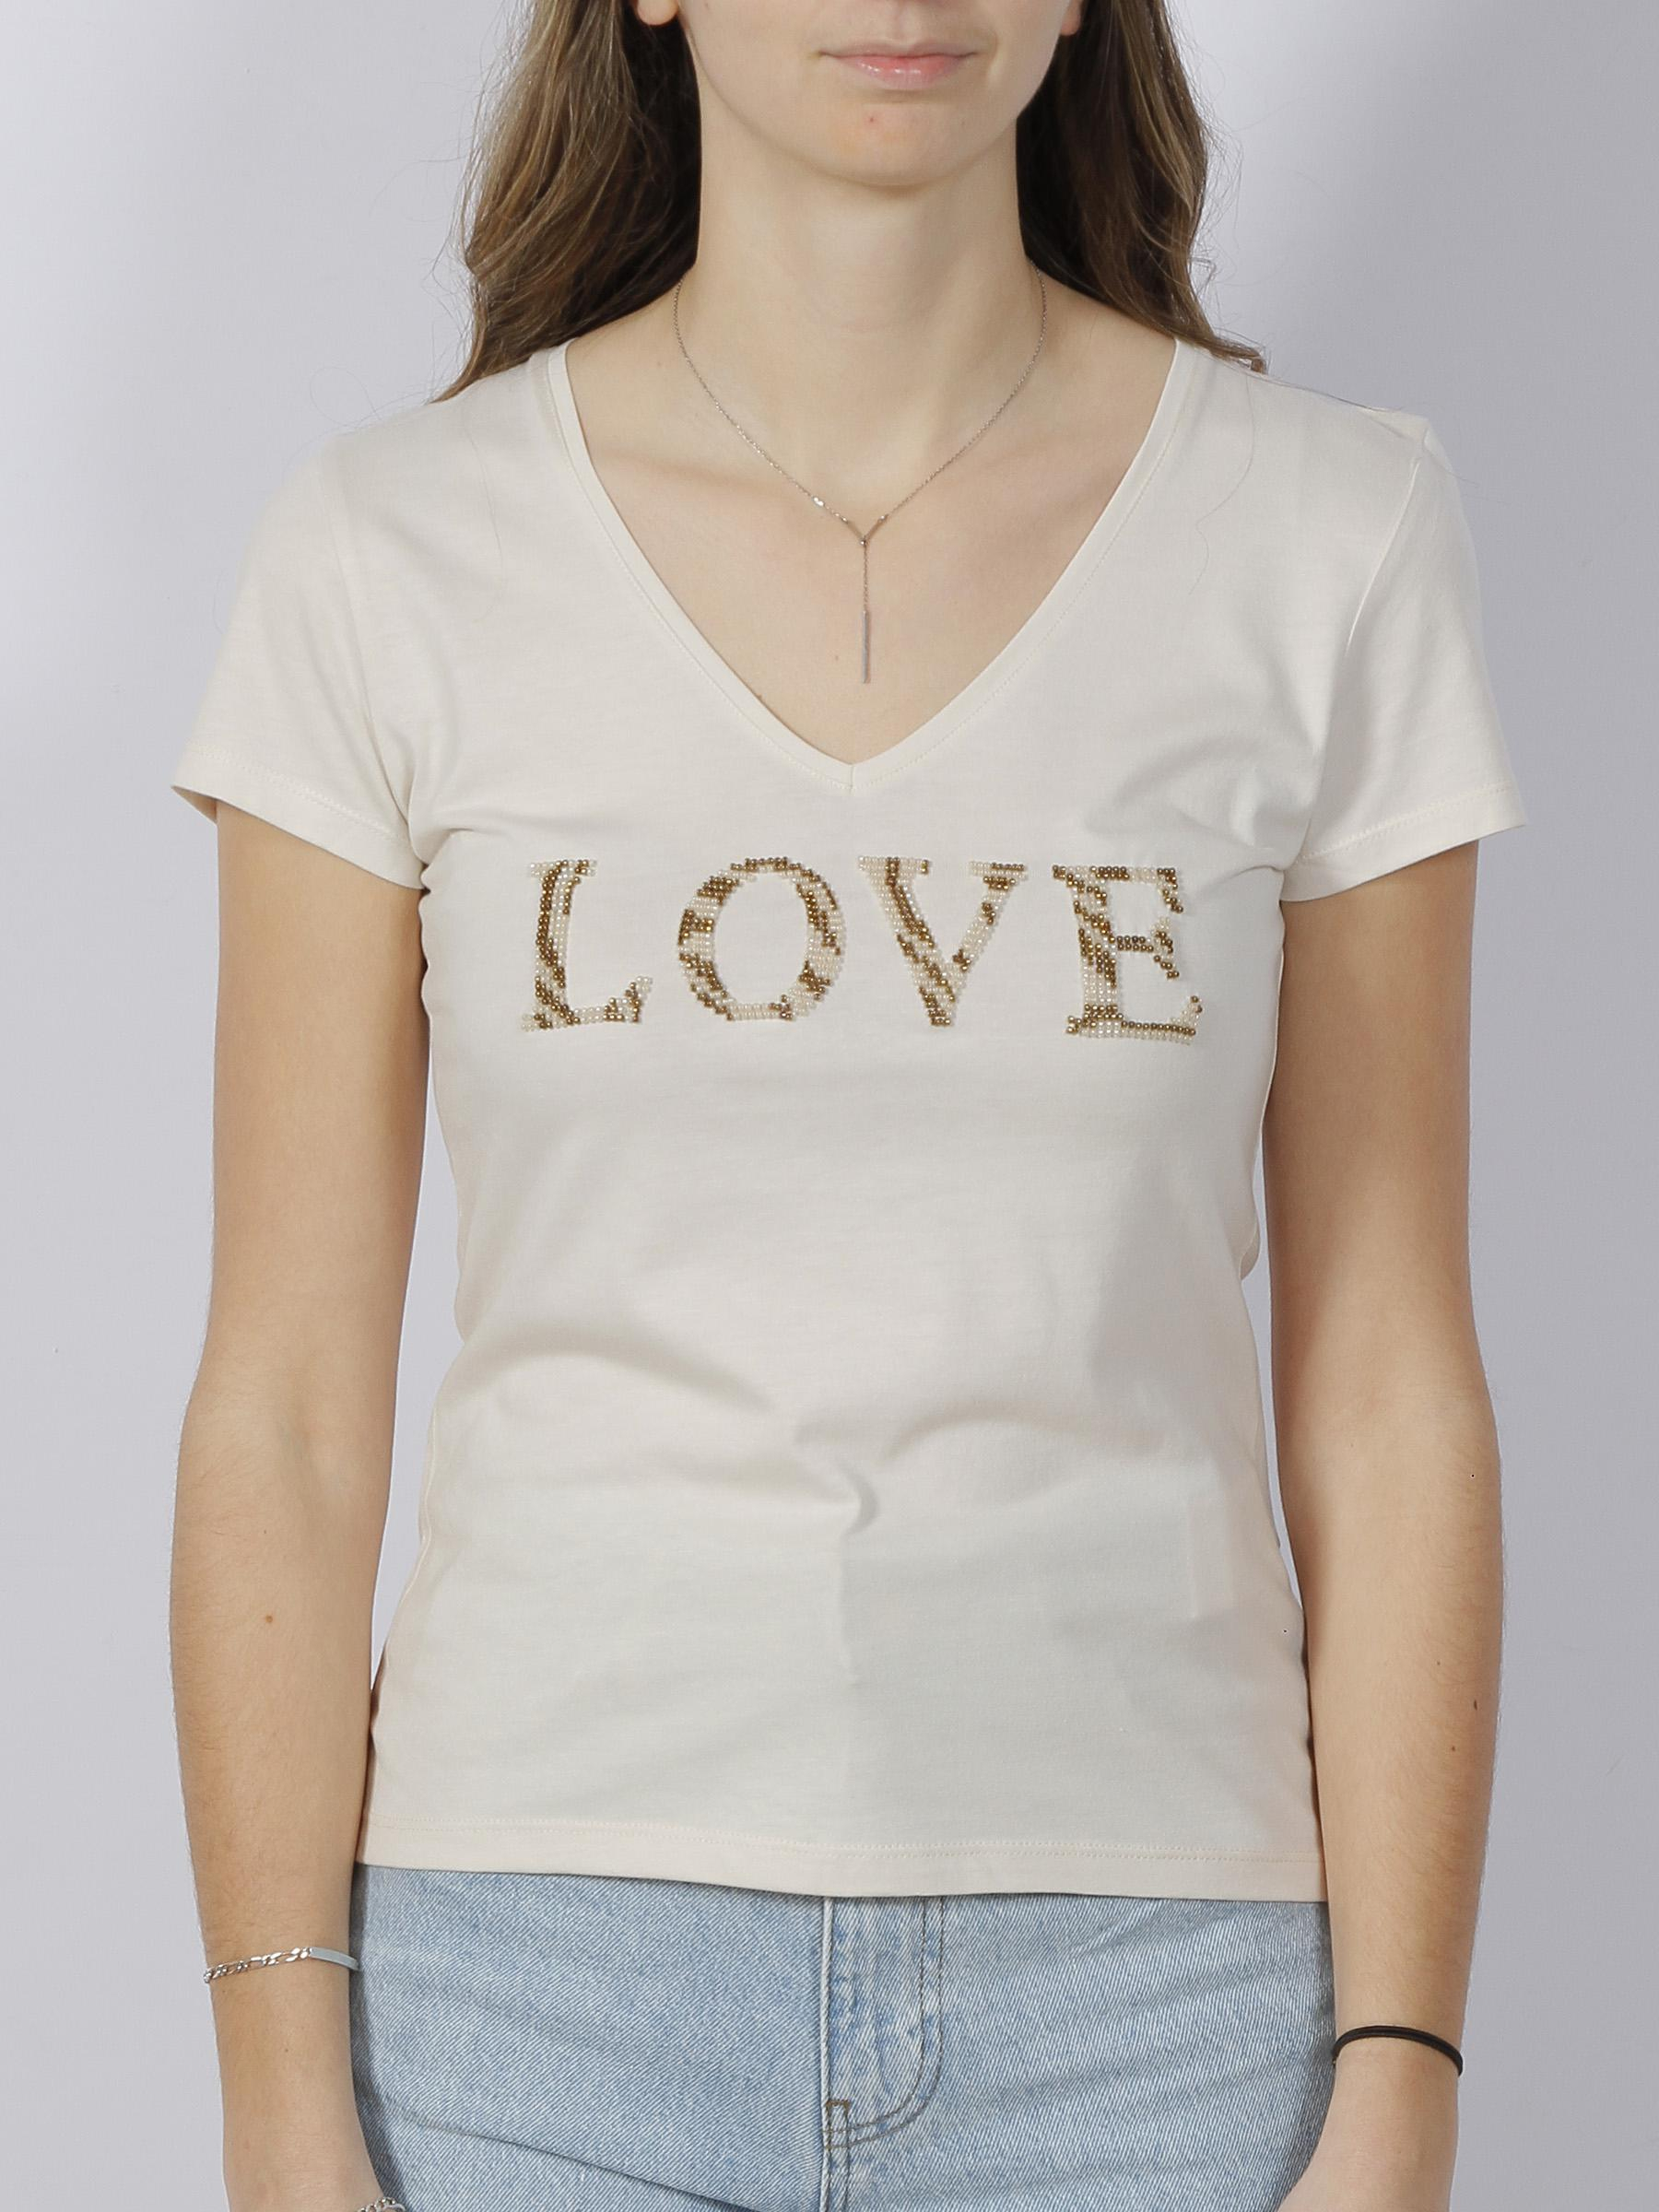 T-shirt love blanc ivoire femme - Morgan